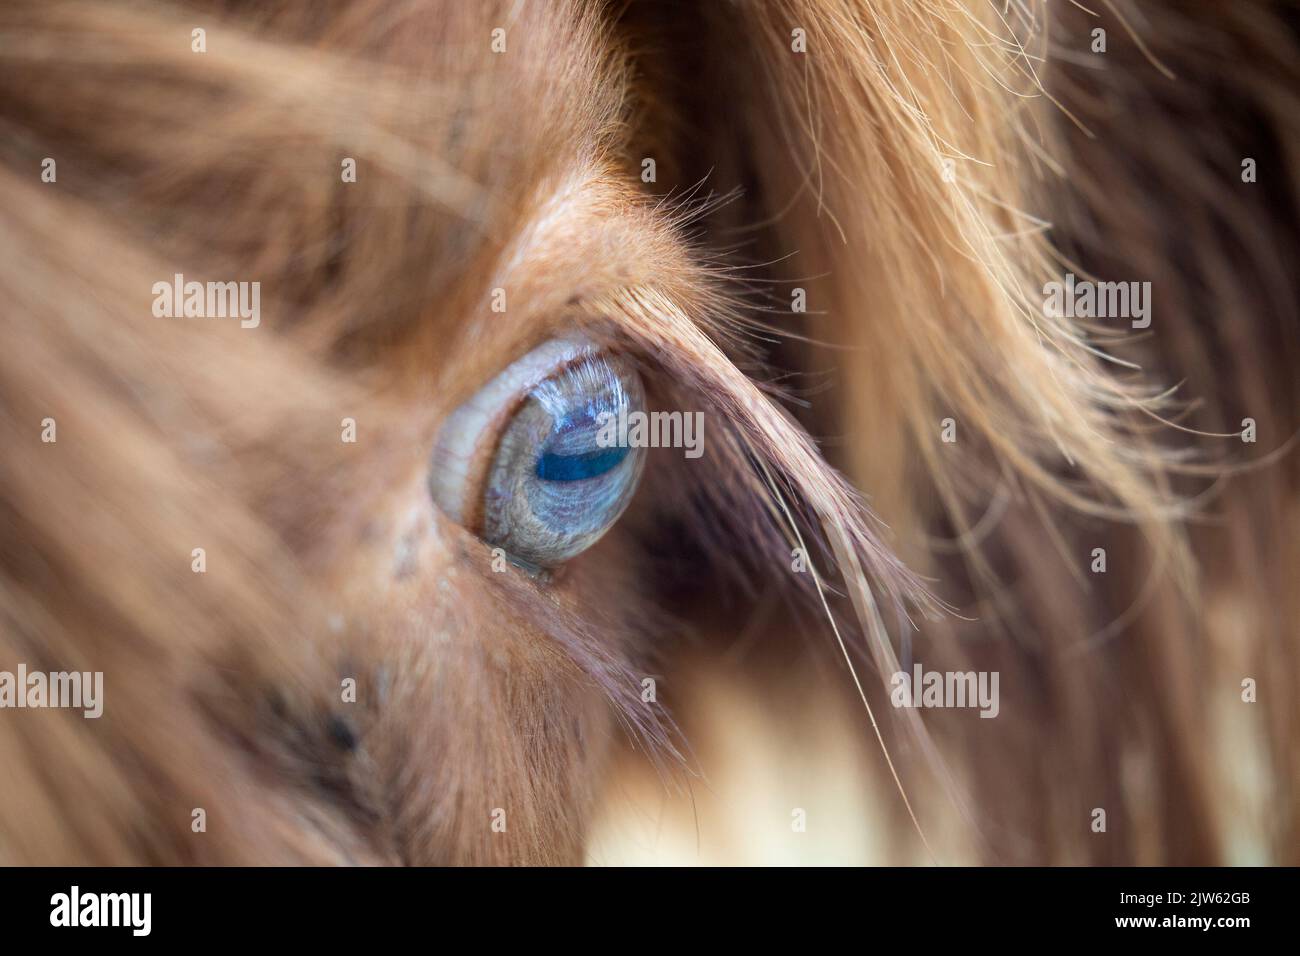 Highland vaca inusual ojo azul de cerca Foto de stock